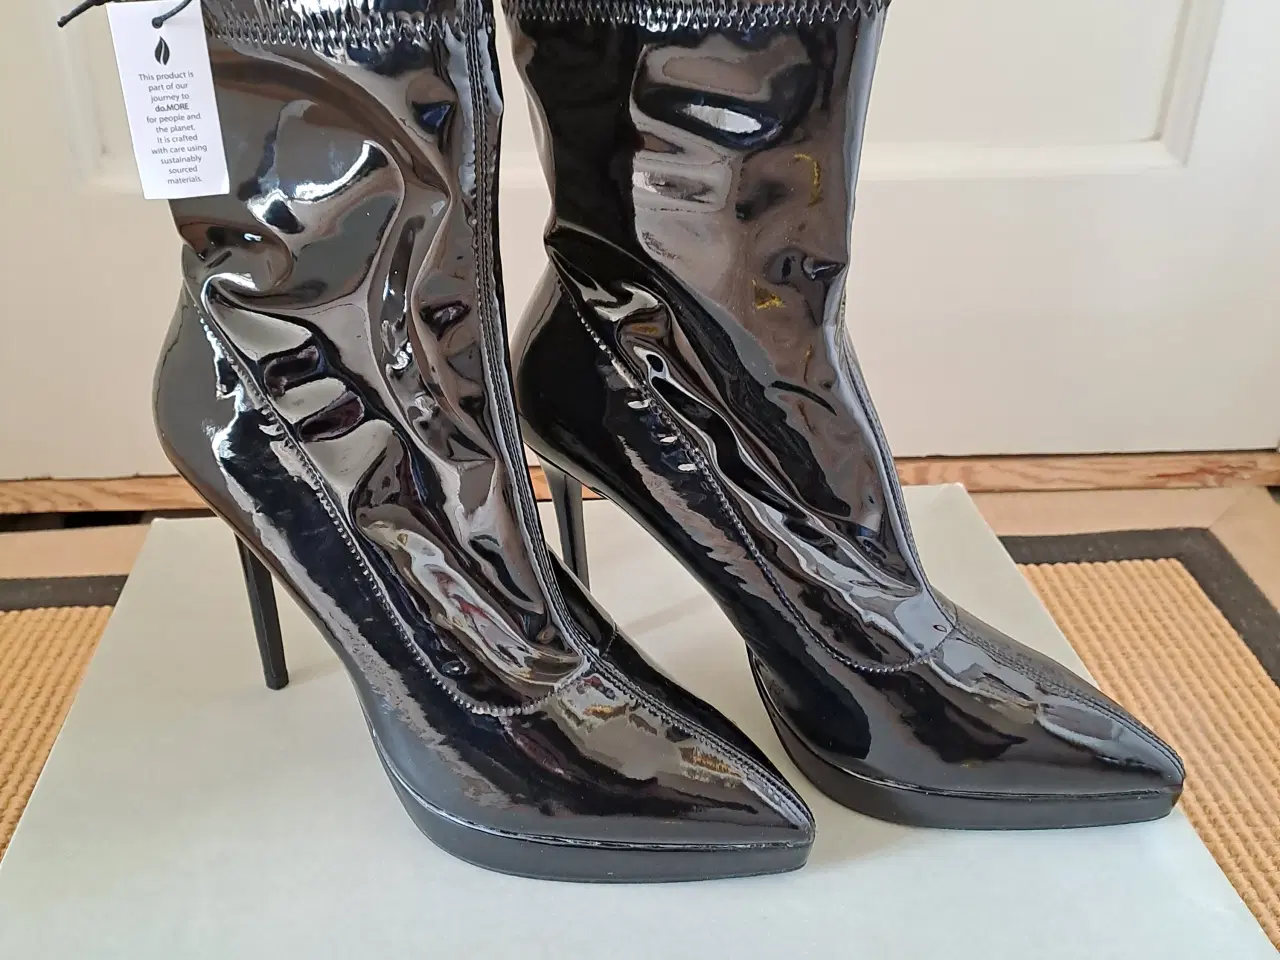 Billede 1 - Nye spejlblanke sorte lak støvler.